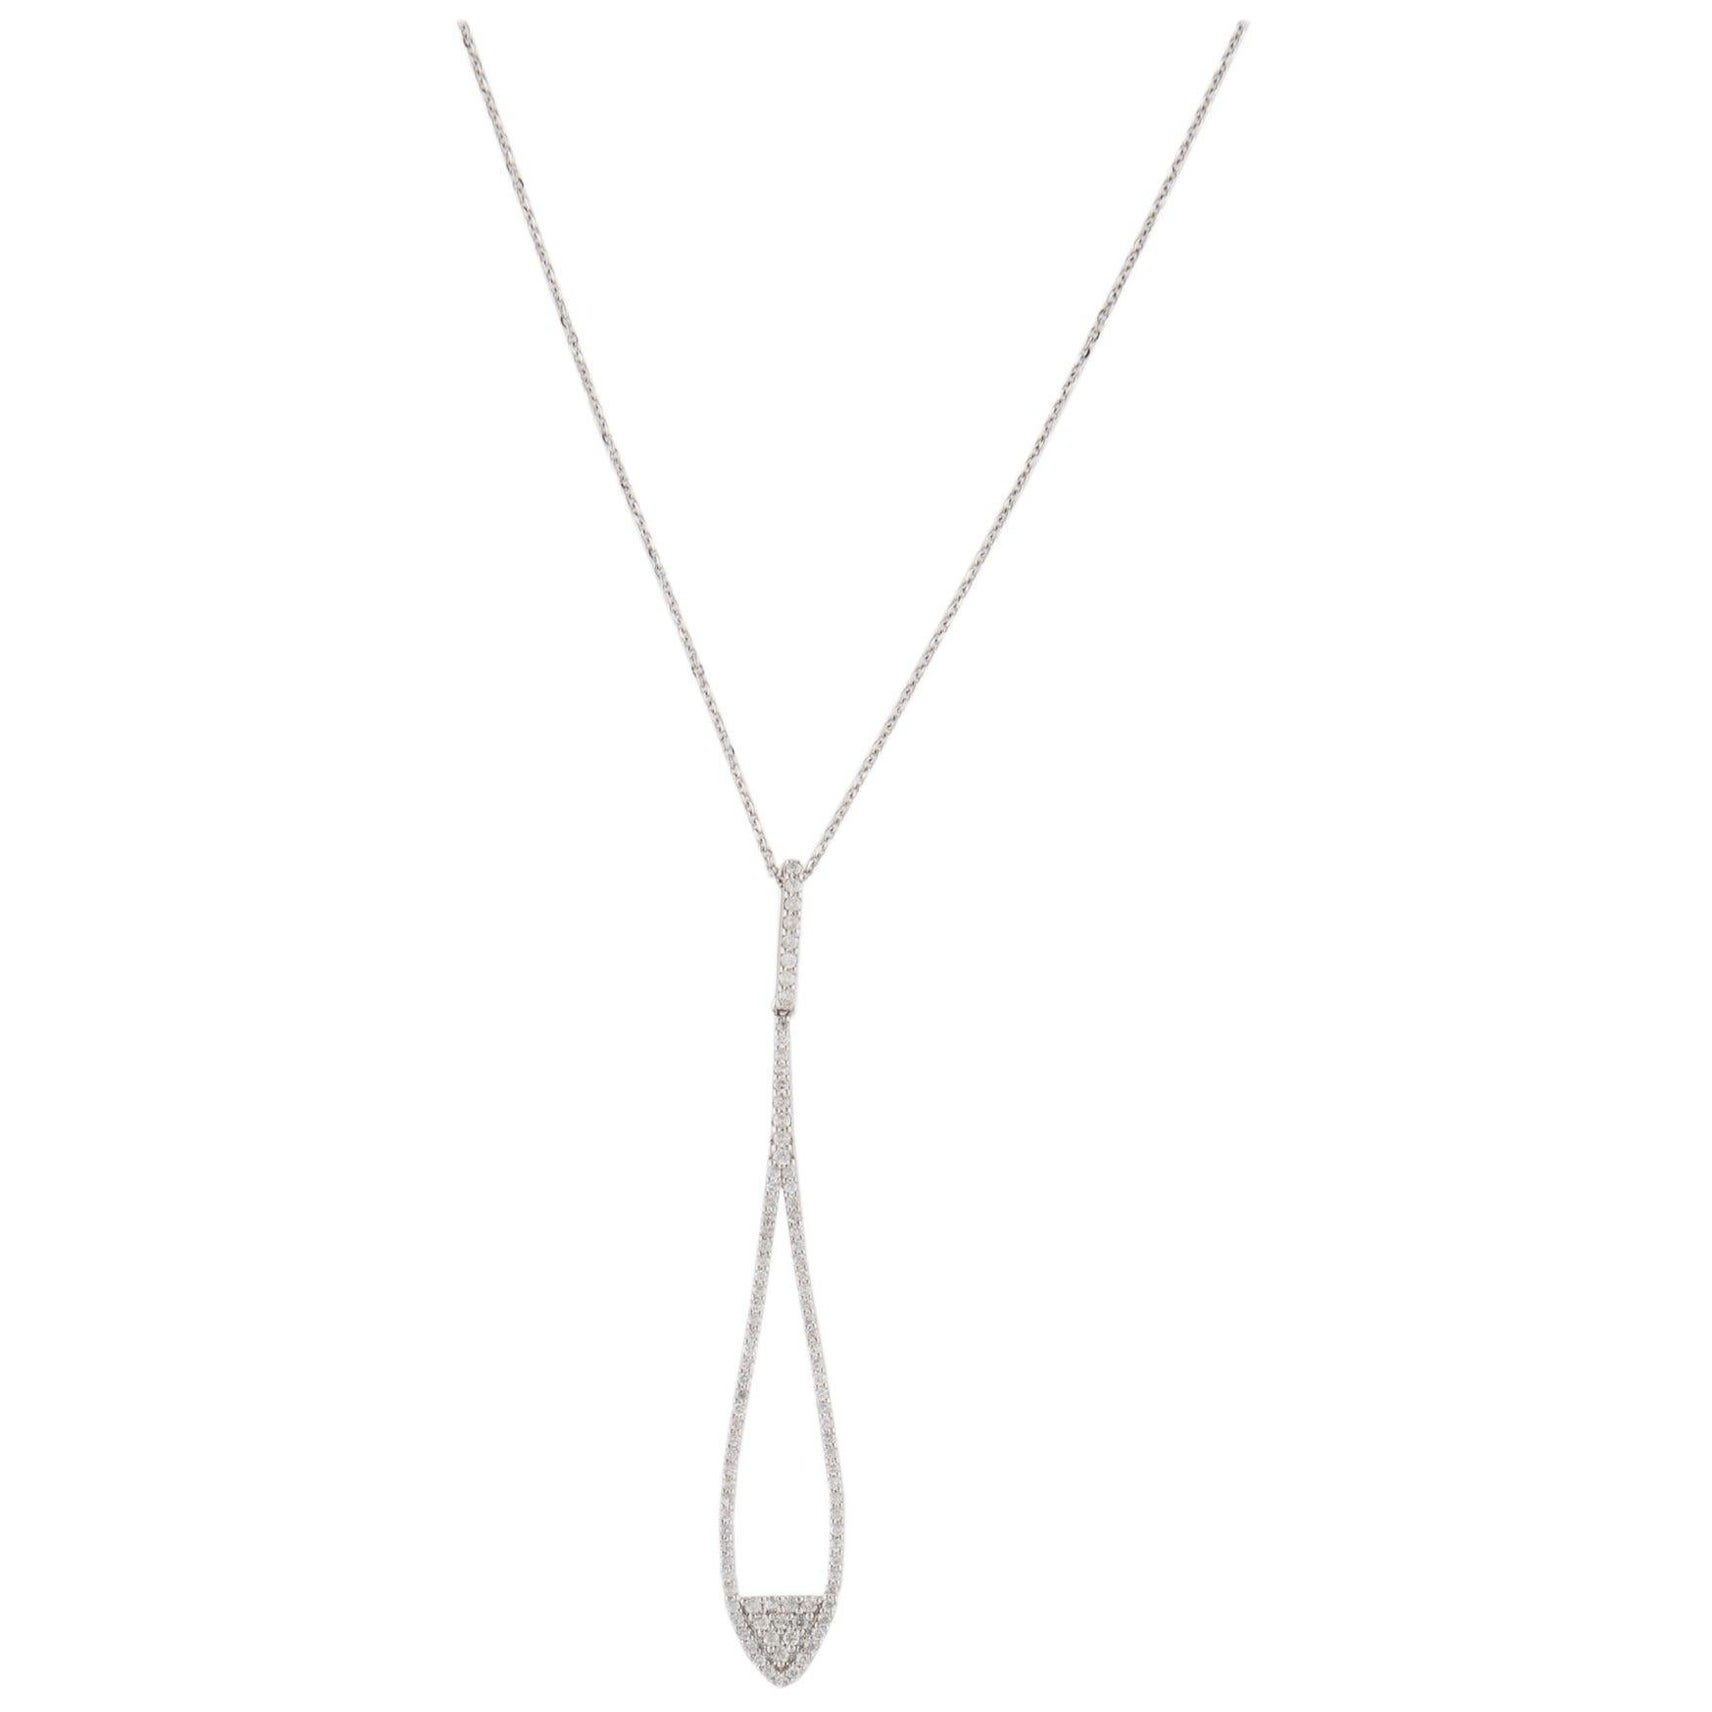 14K Diamond Pavé Drop Pendant Necklace - Elegant Luxury Statement Piece